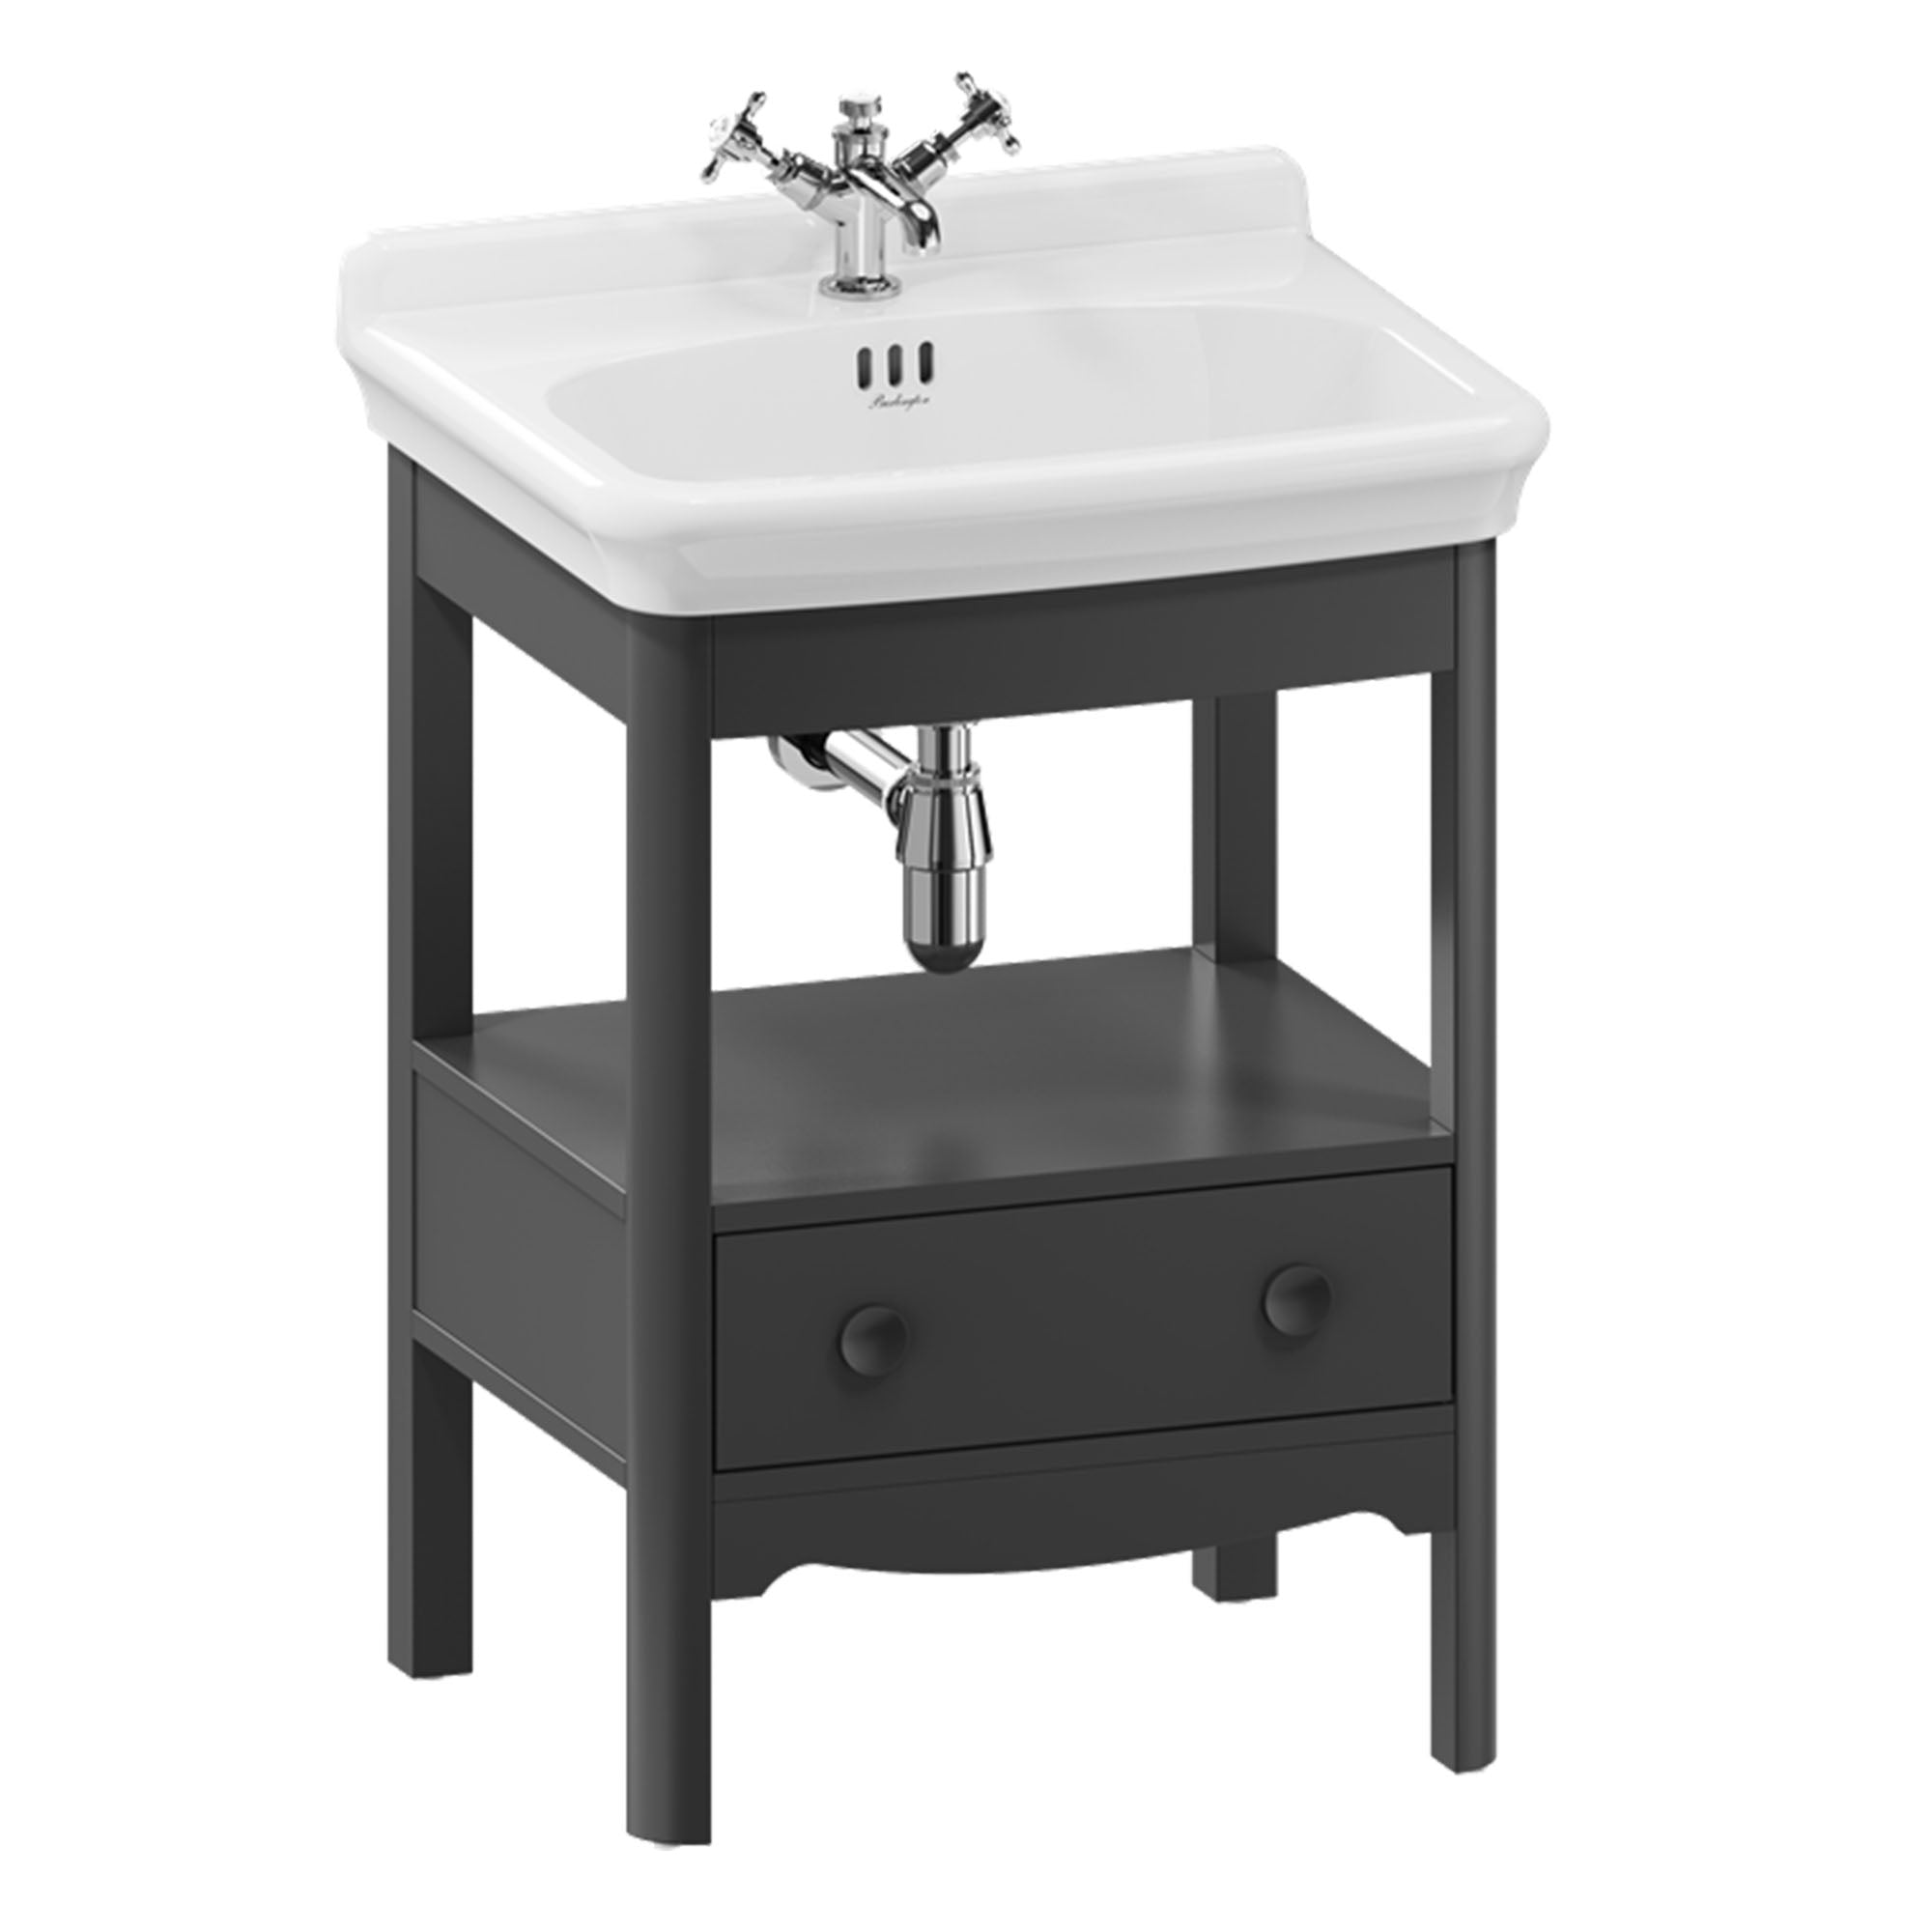 burlington guild 620 floorstanding single drawer vanity unit washbasin ashbee grey